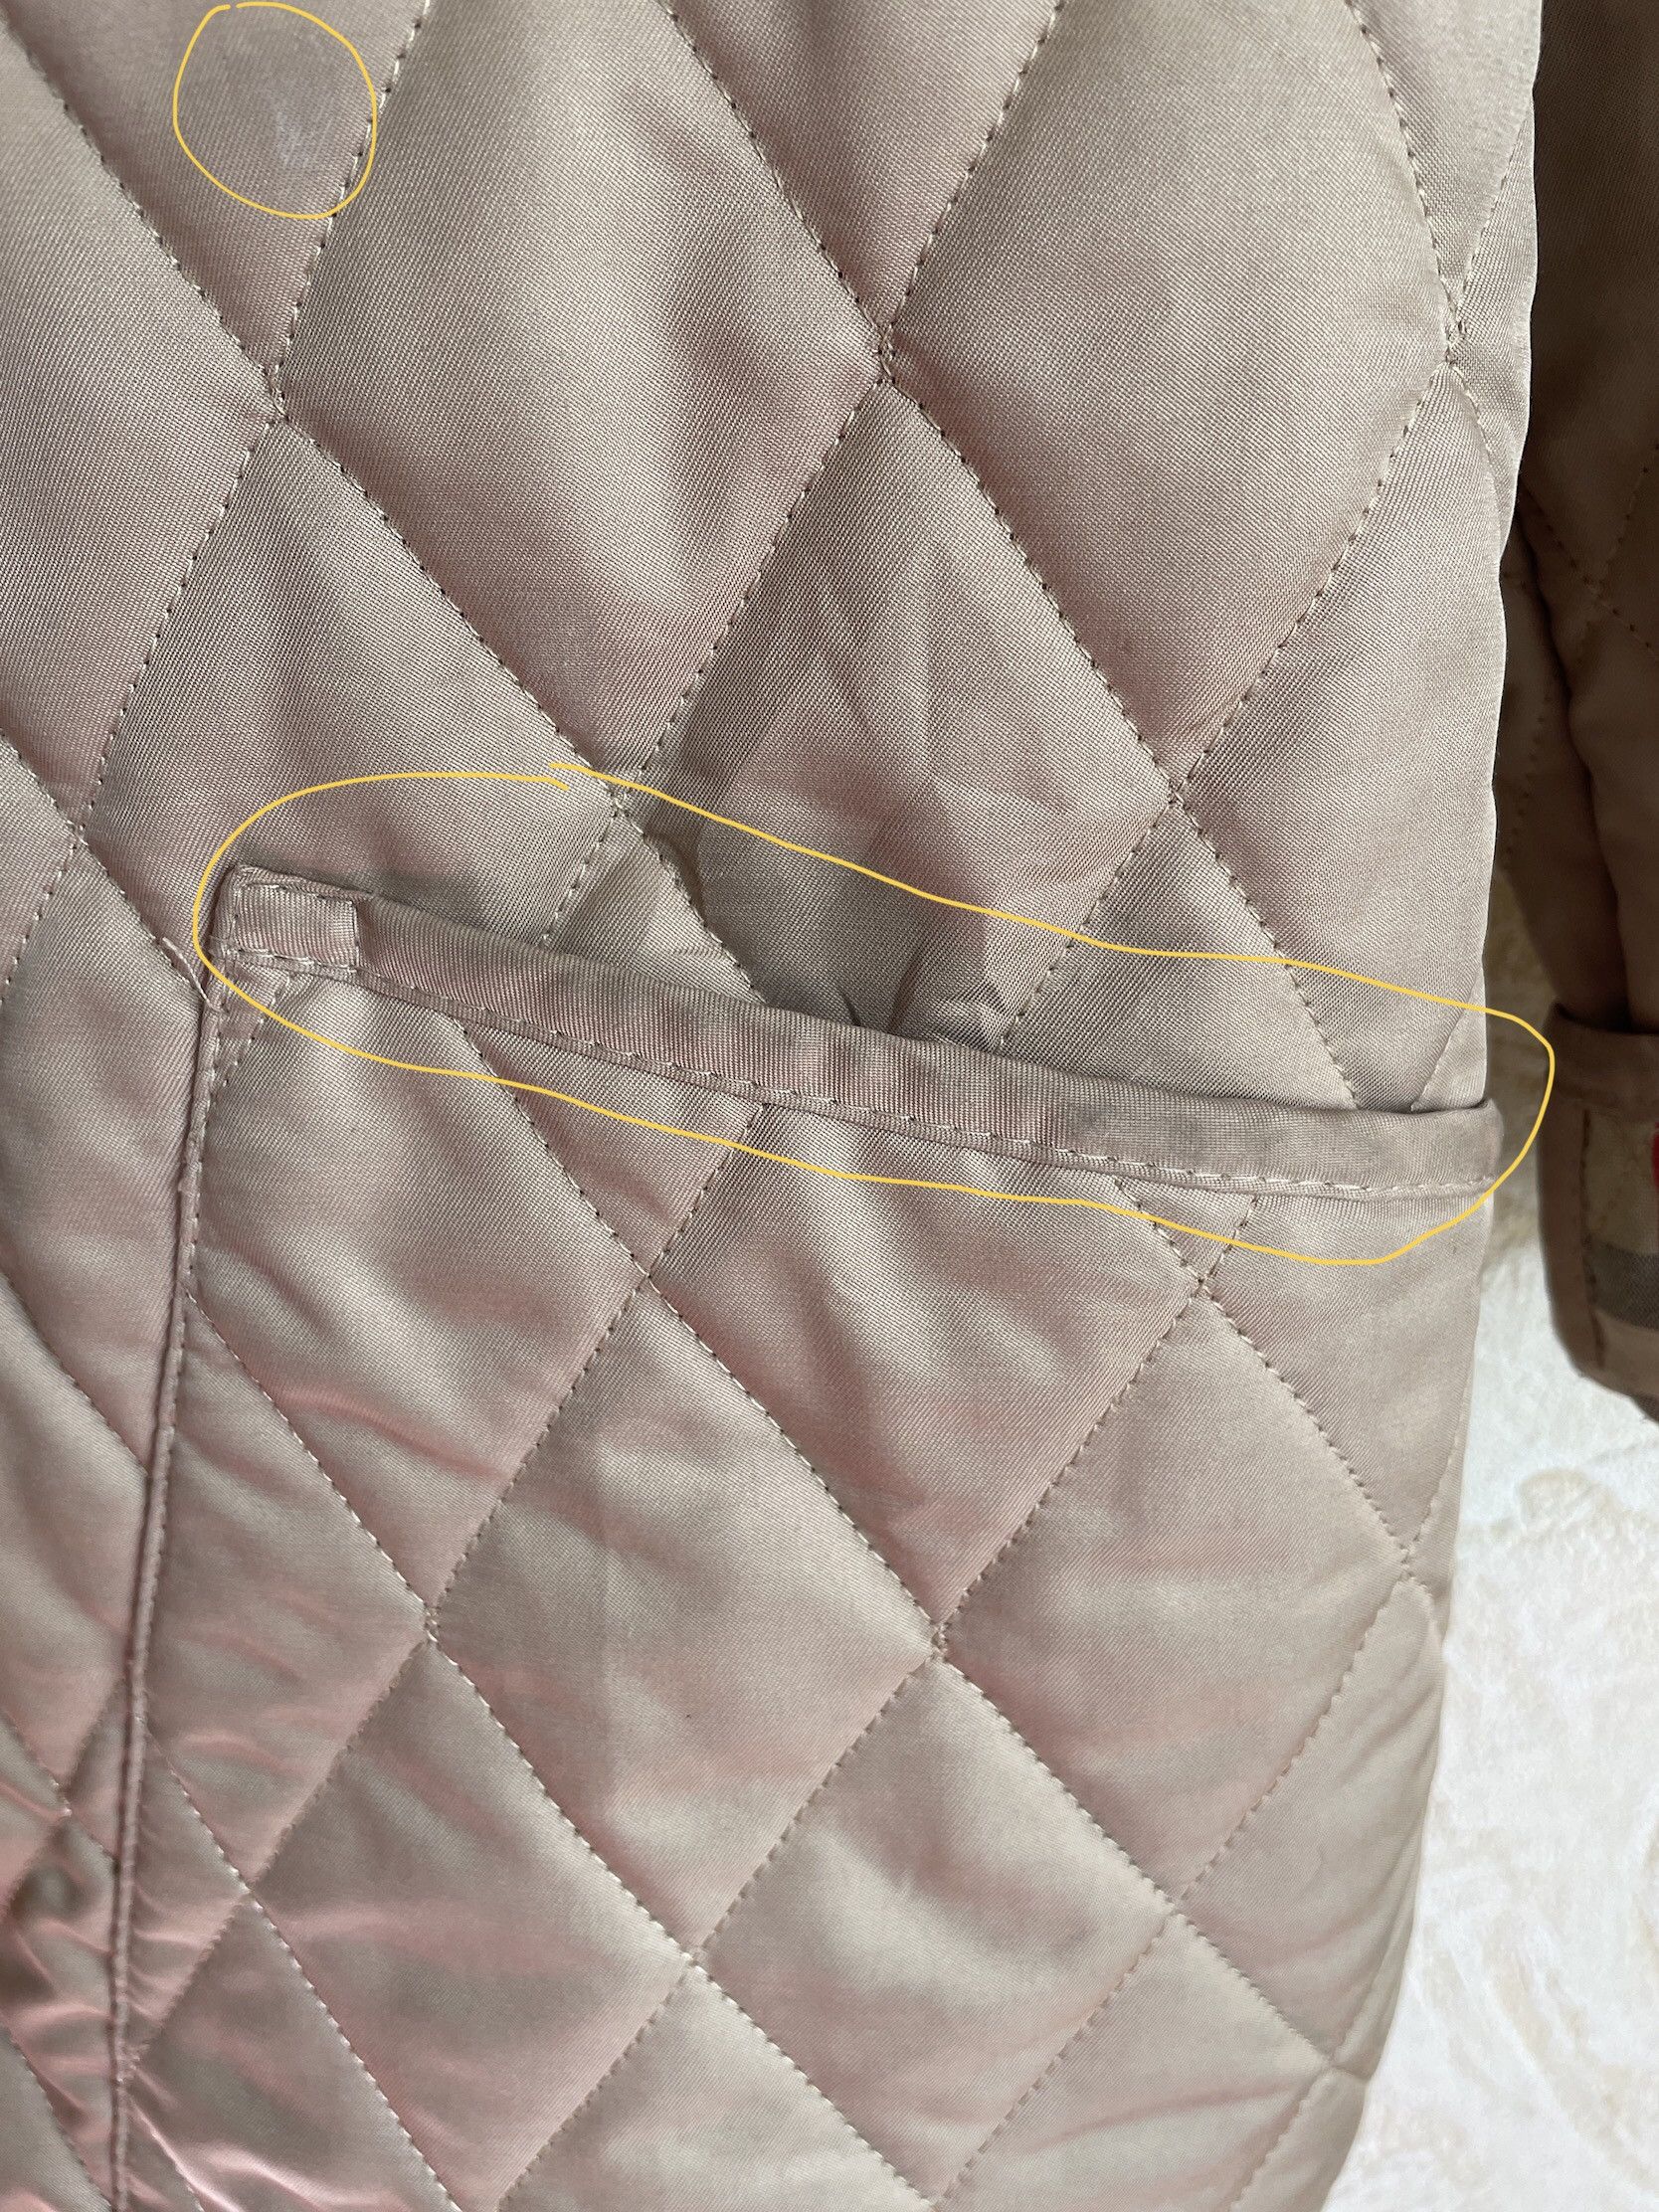 Burberry Burberry Beige Diamond Quilted Jacket Button Nova Check Size M / US 6-8 / IT 42-44 - 10 Thumbnail